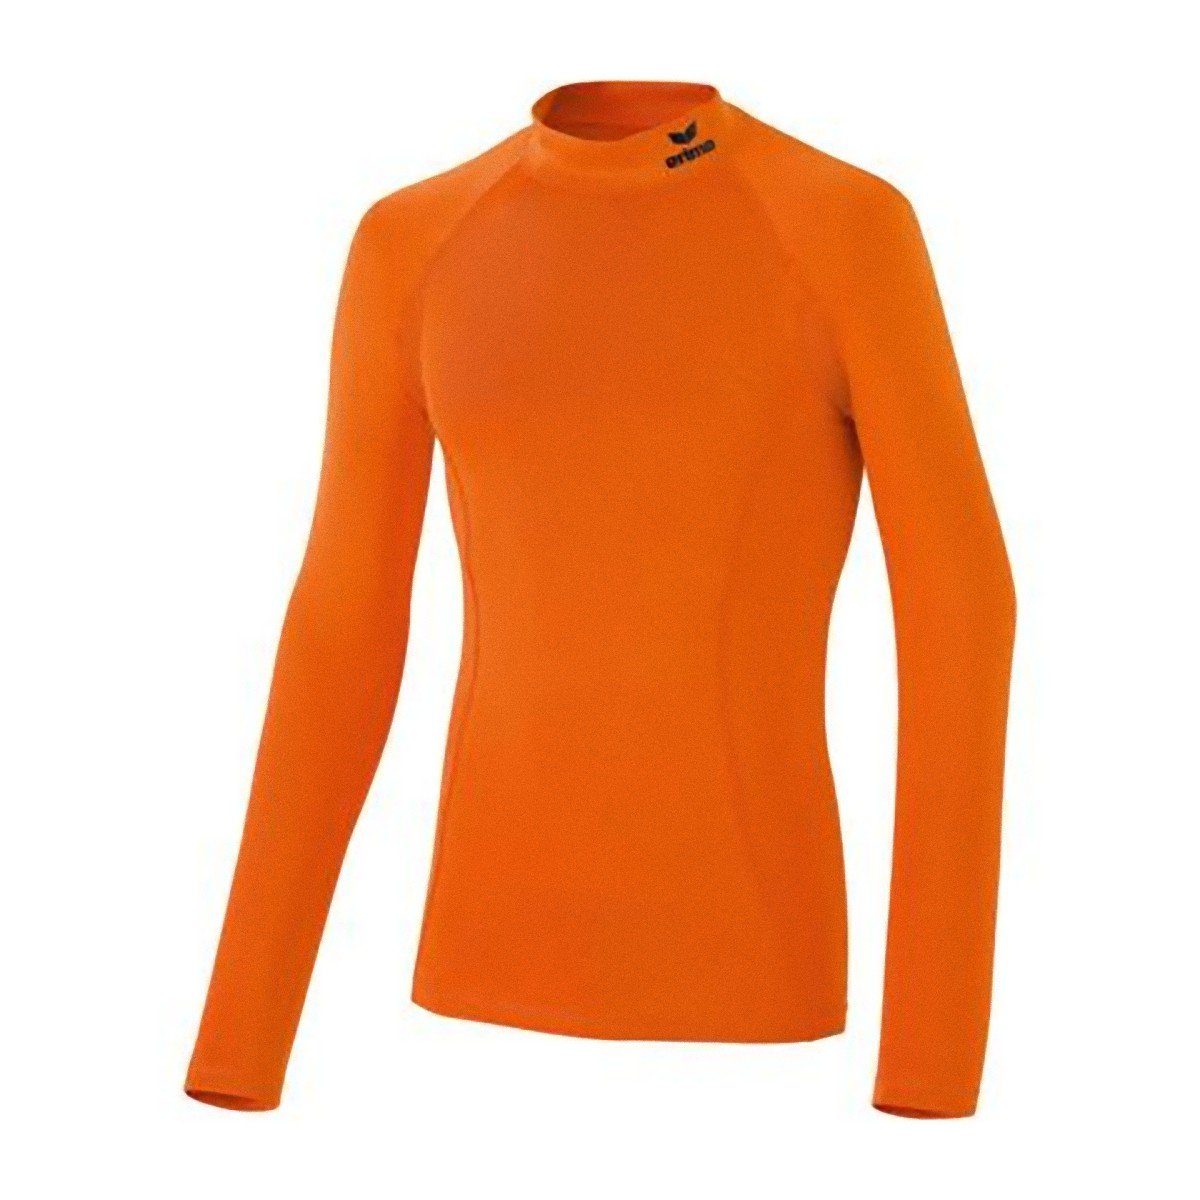 Erima Laufshirt Langarm Funktionsshirt Longsleeve Sportshirt Support Fussball Pullover Orange Shirt